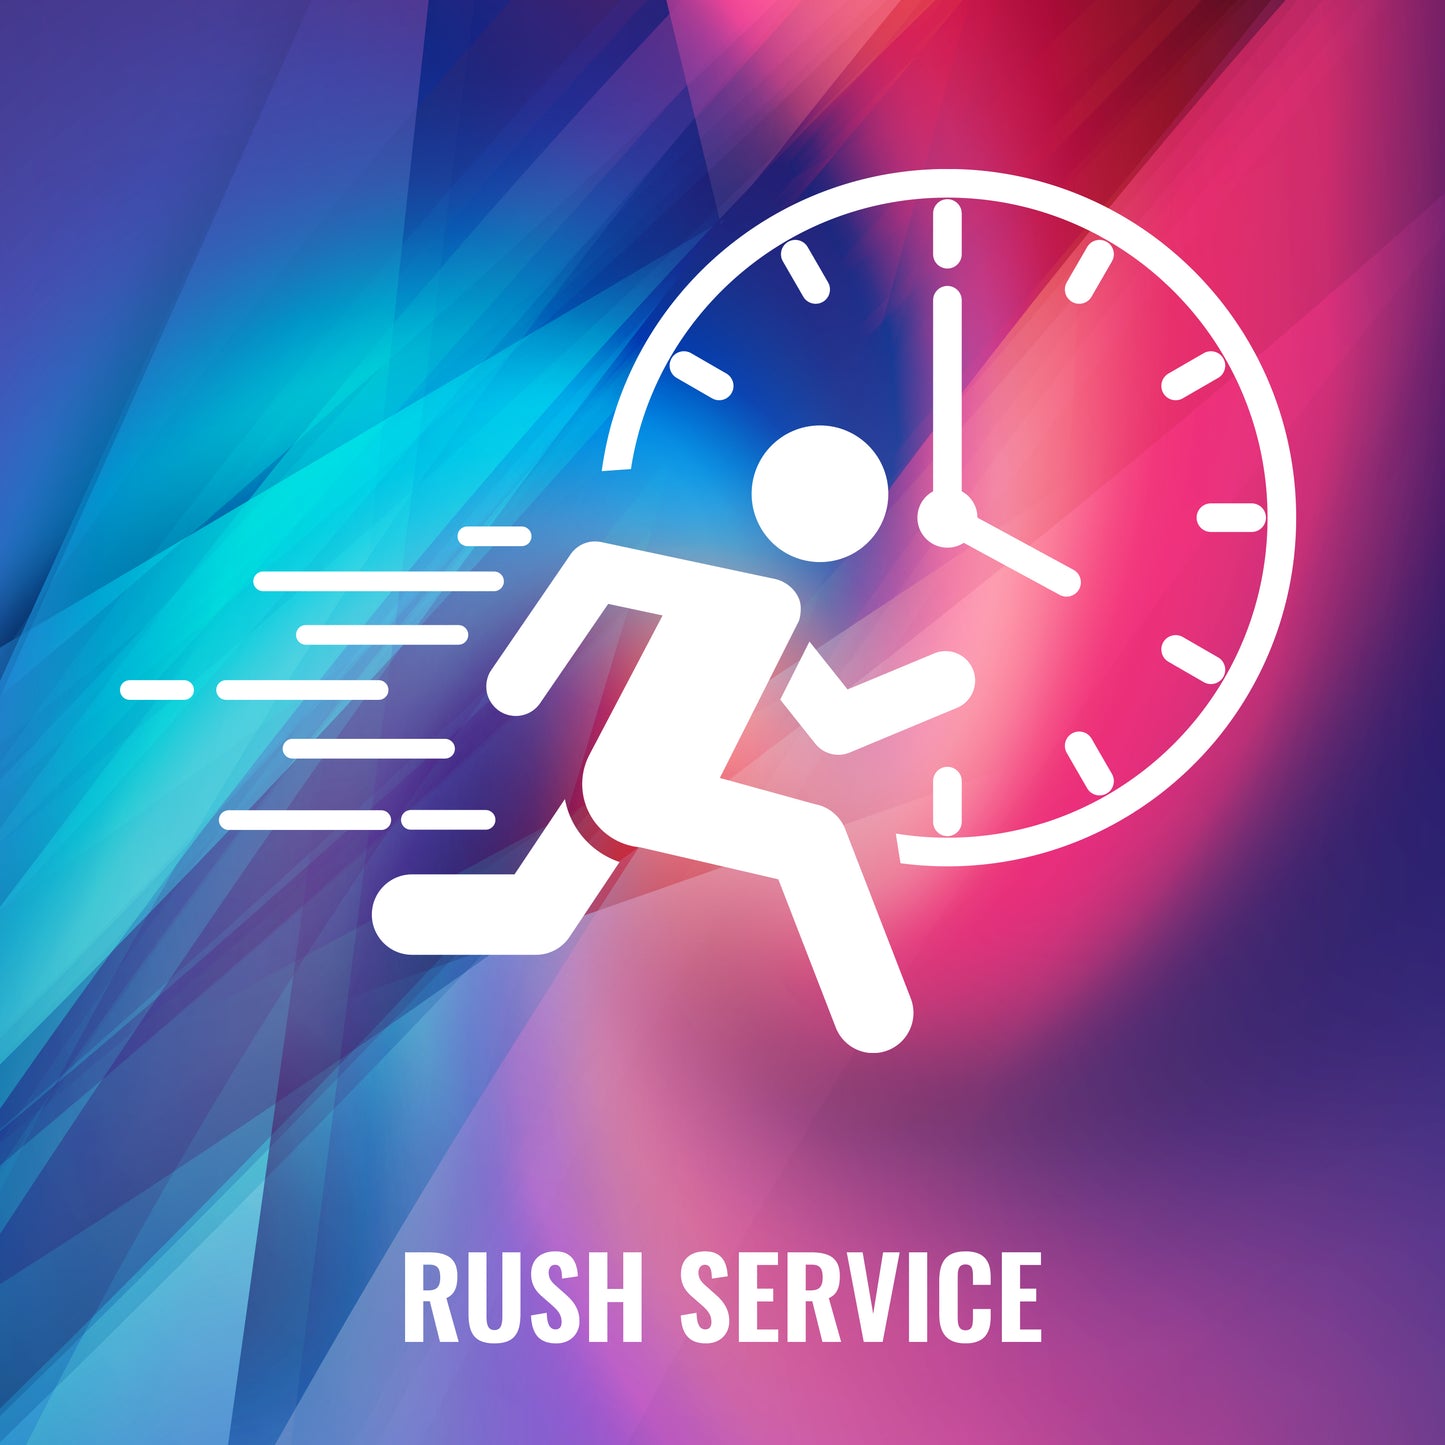 Rush Service Fee